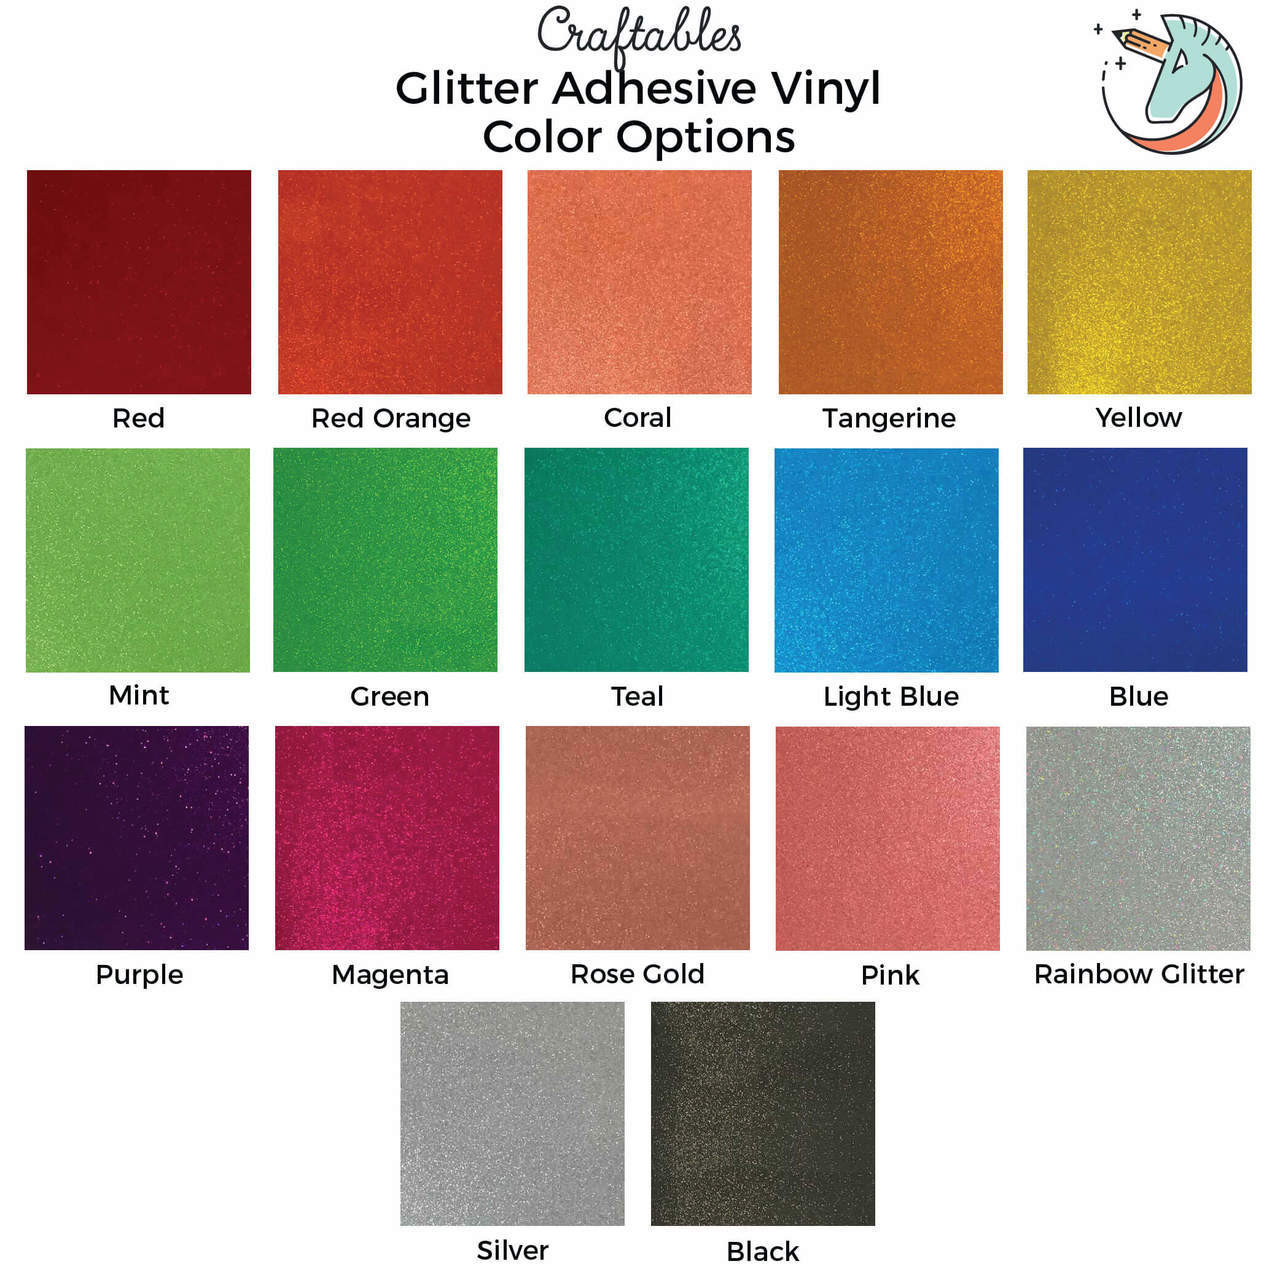 Green Glitter Adhesive Vinyl Rolls By Craftables